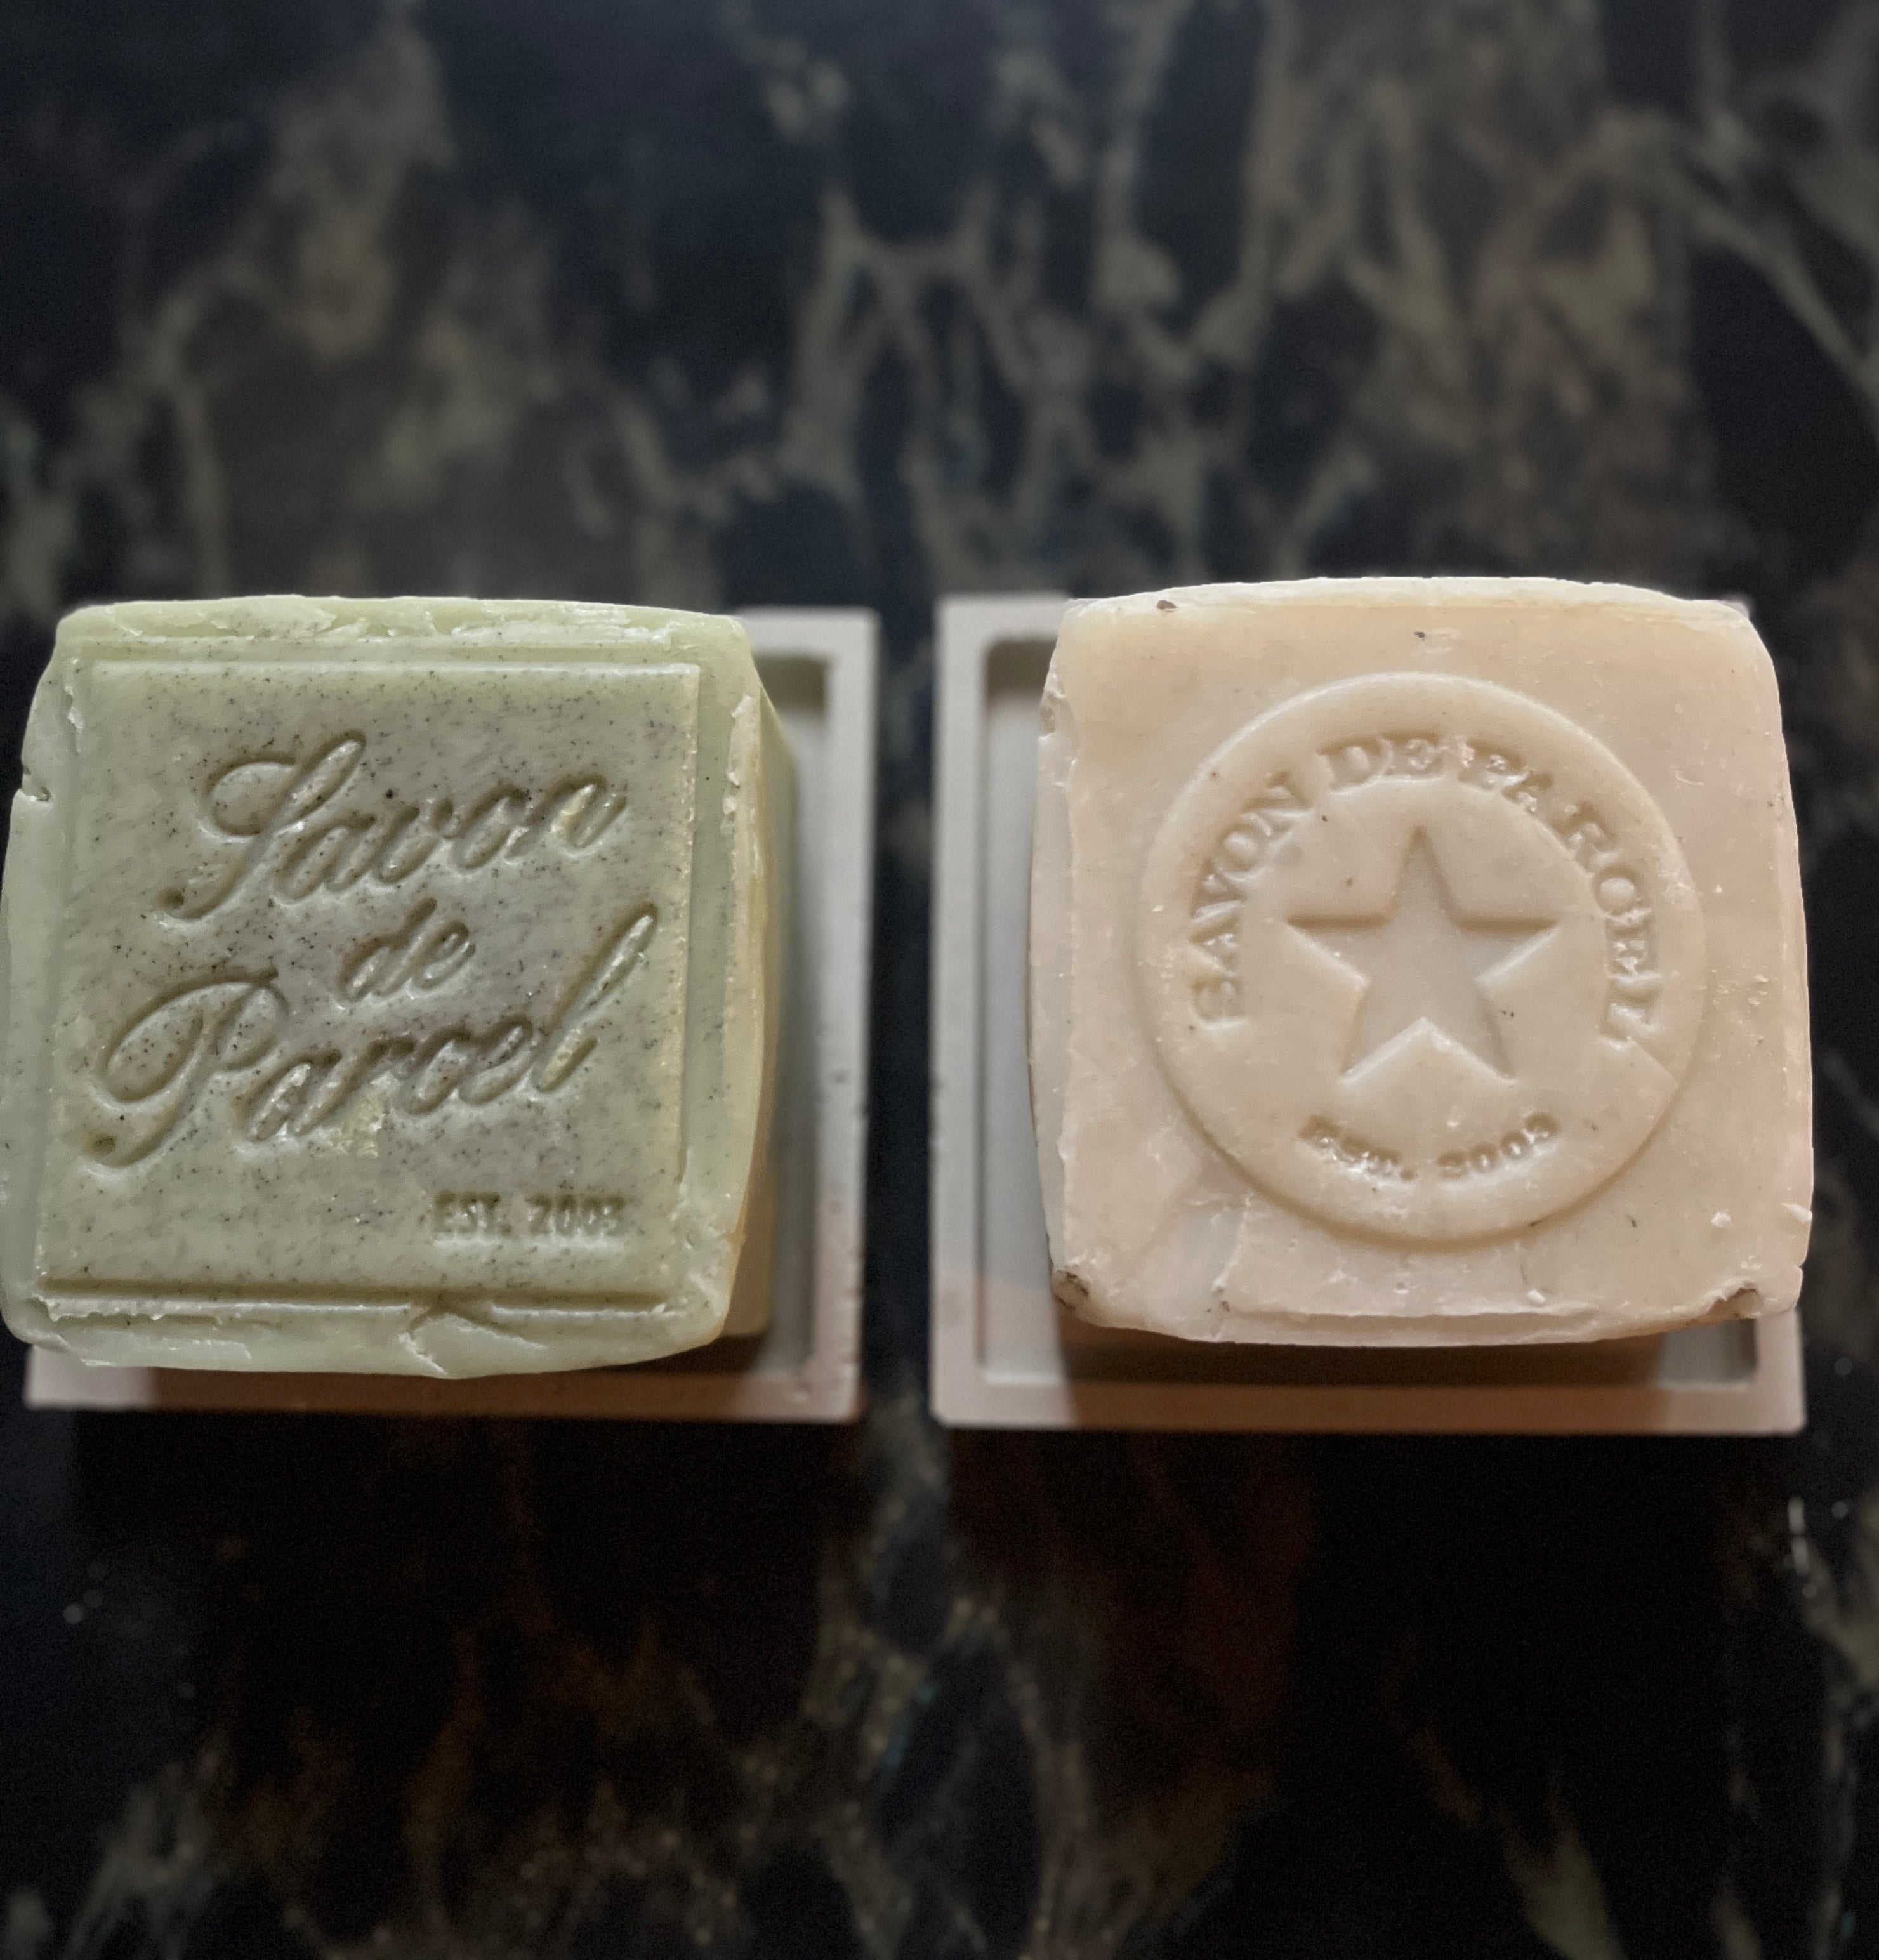 Savon de Parcel - Handmade Bar Soap